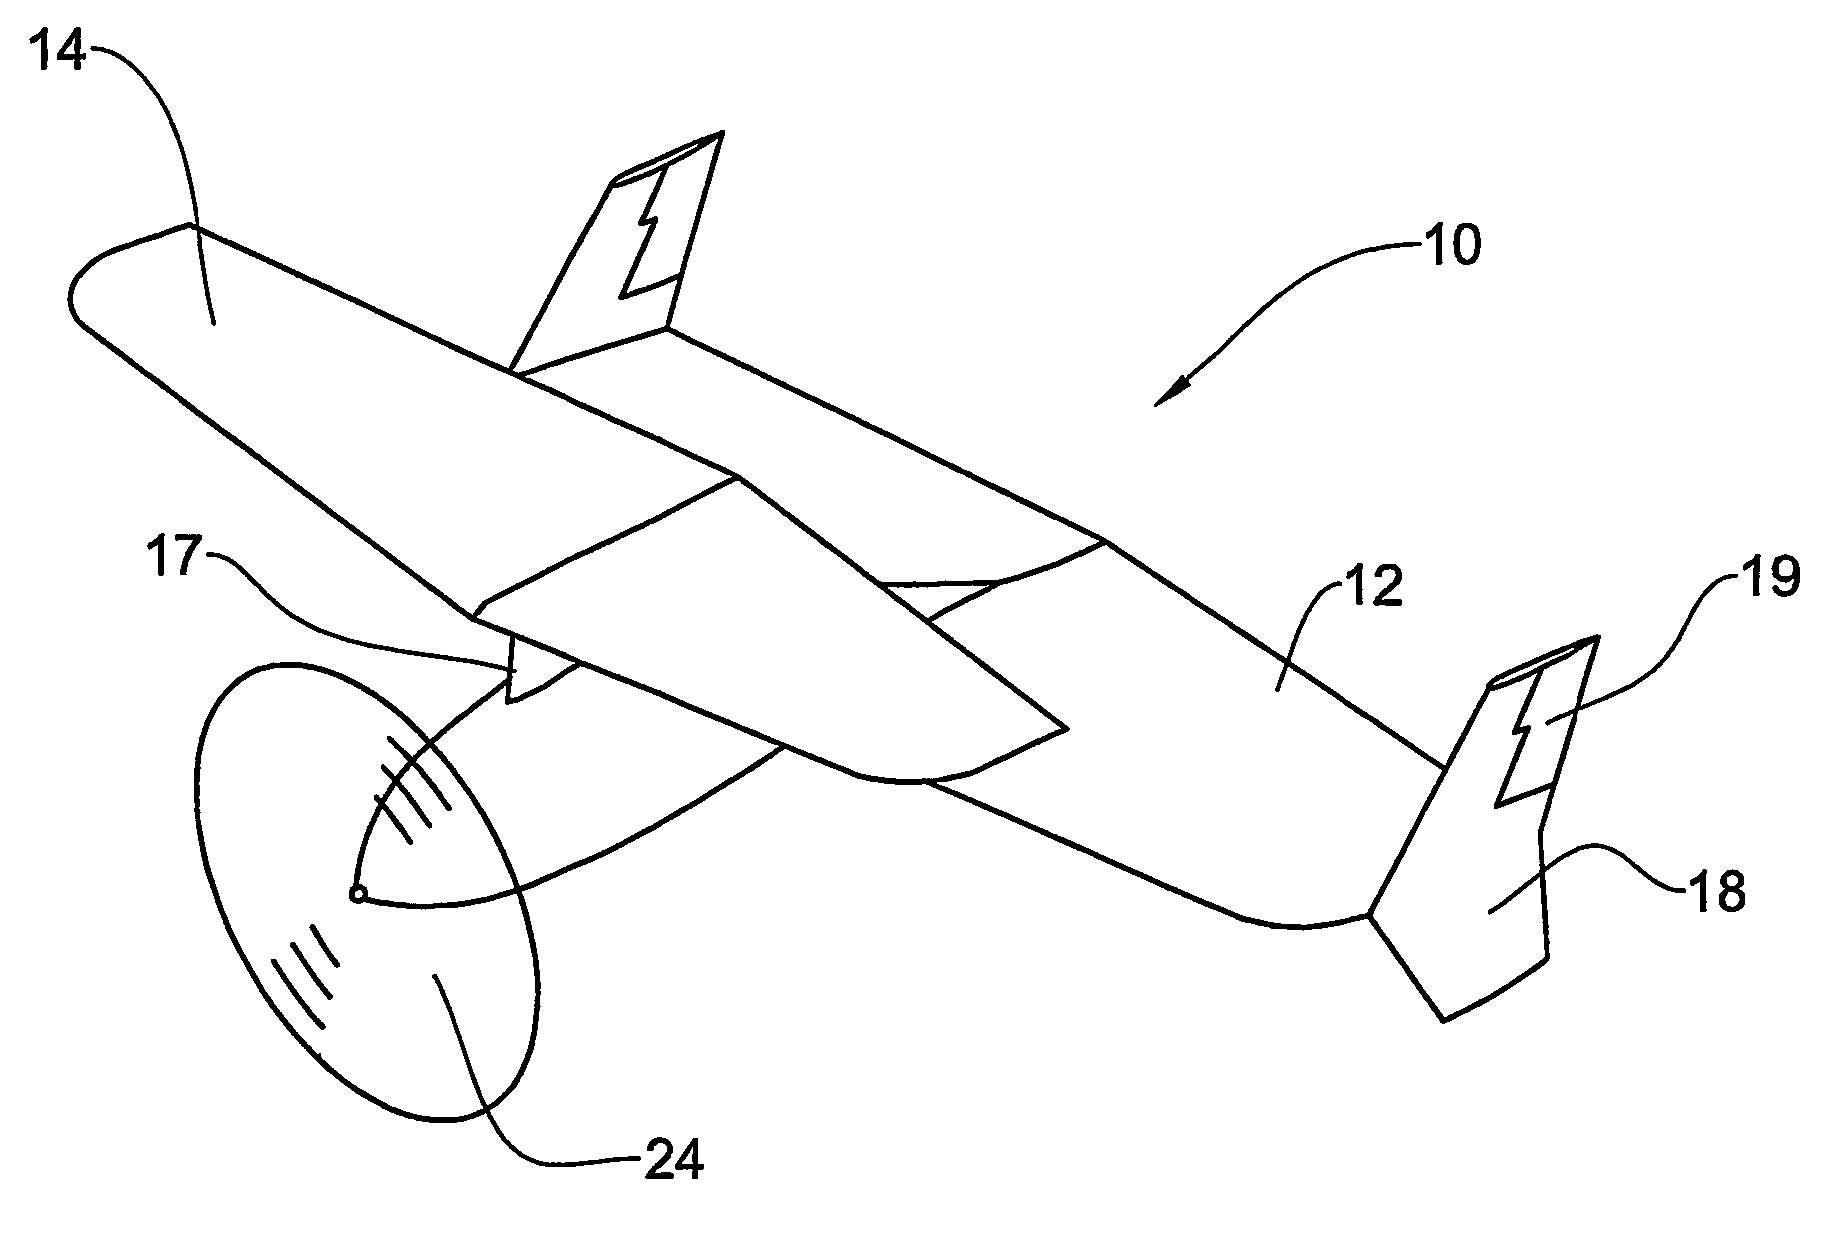 Aircraft configuration for micro and mini UAV